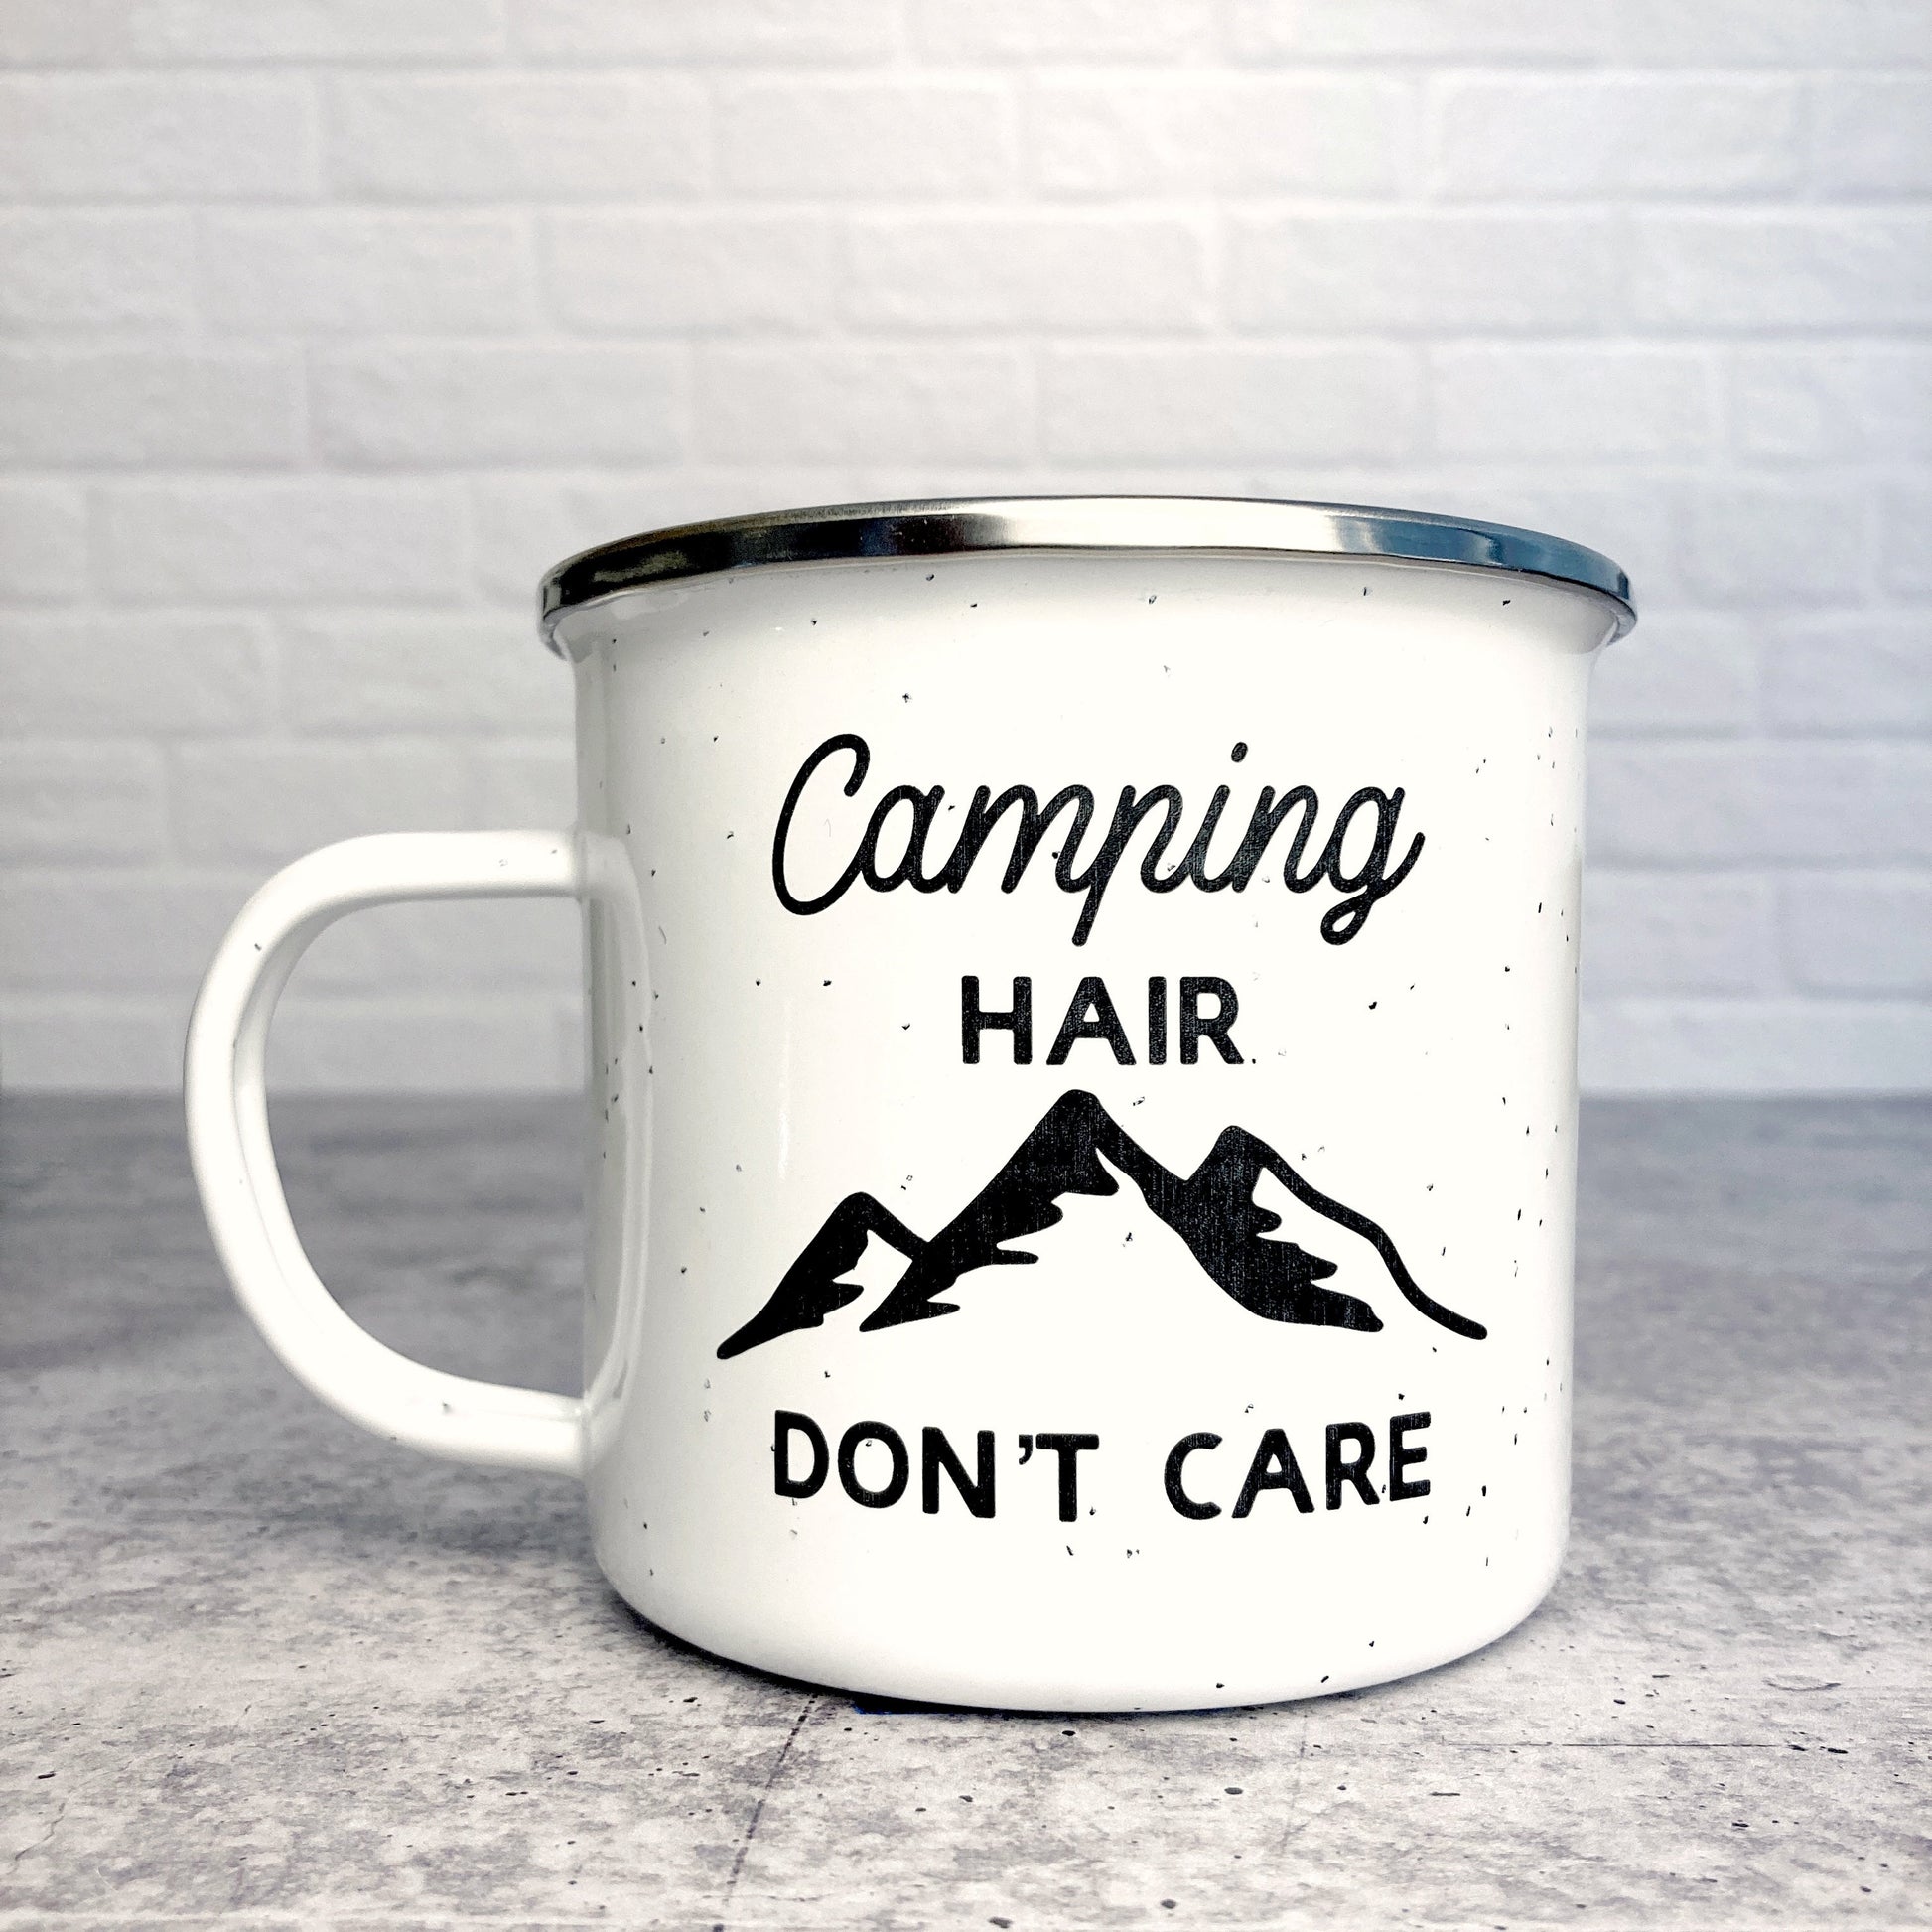 Camping Hair Don't Care Design on a White Enamel Mug